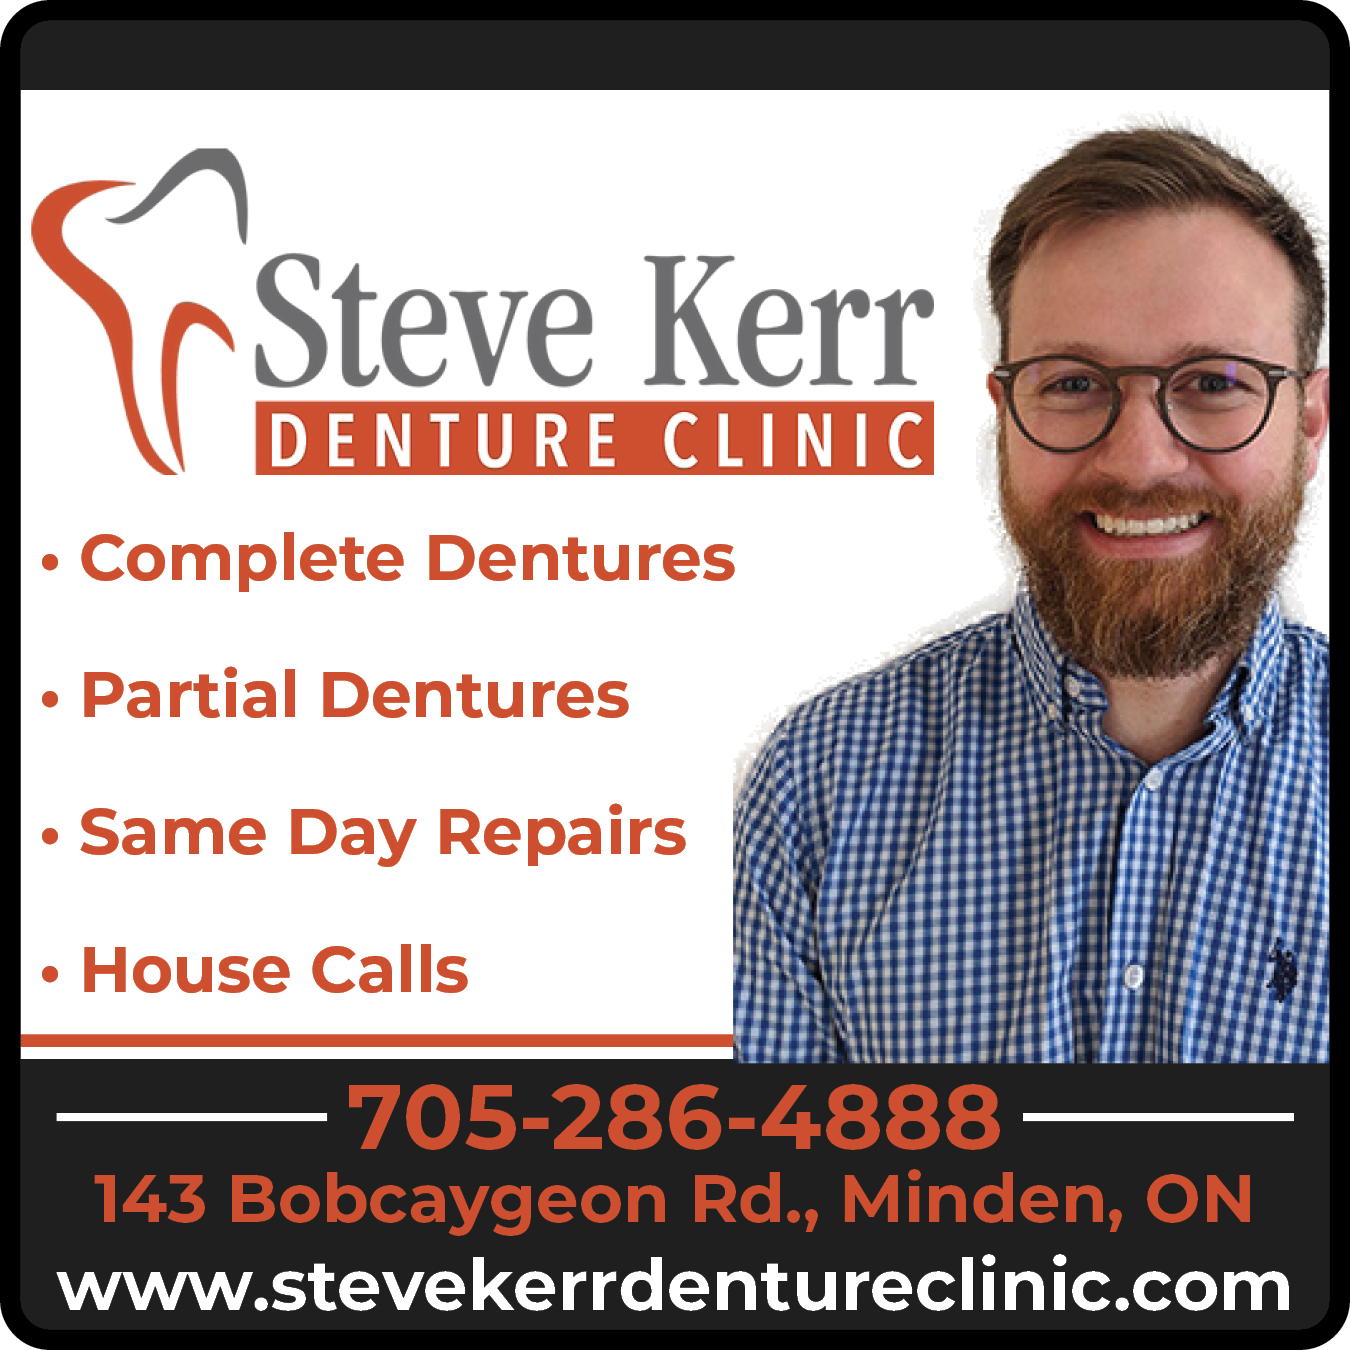 Steve Kerr Denture Clinic